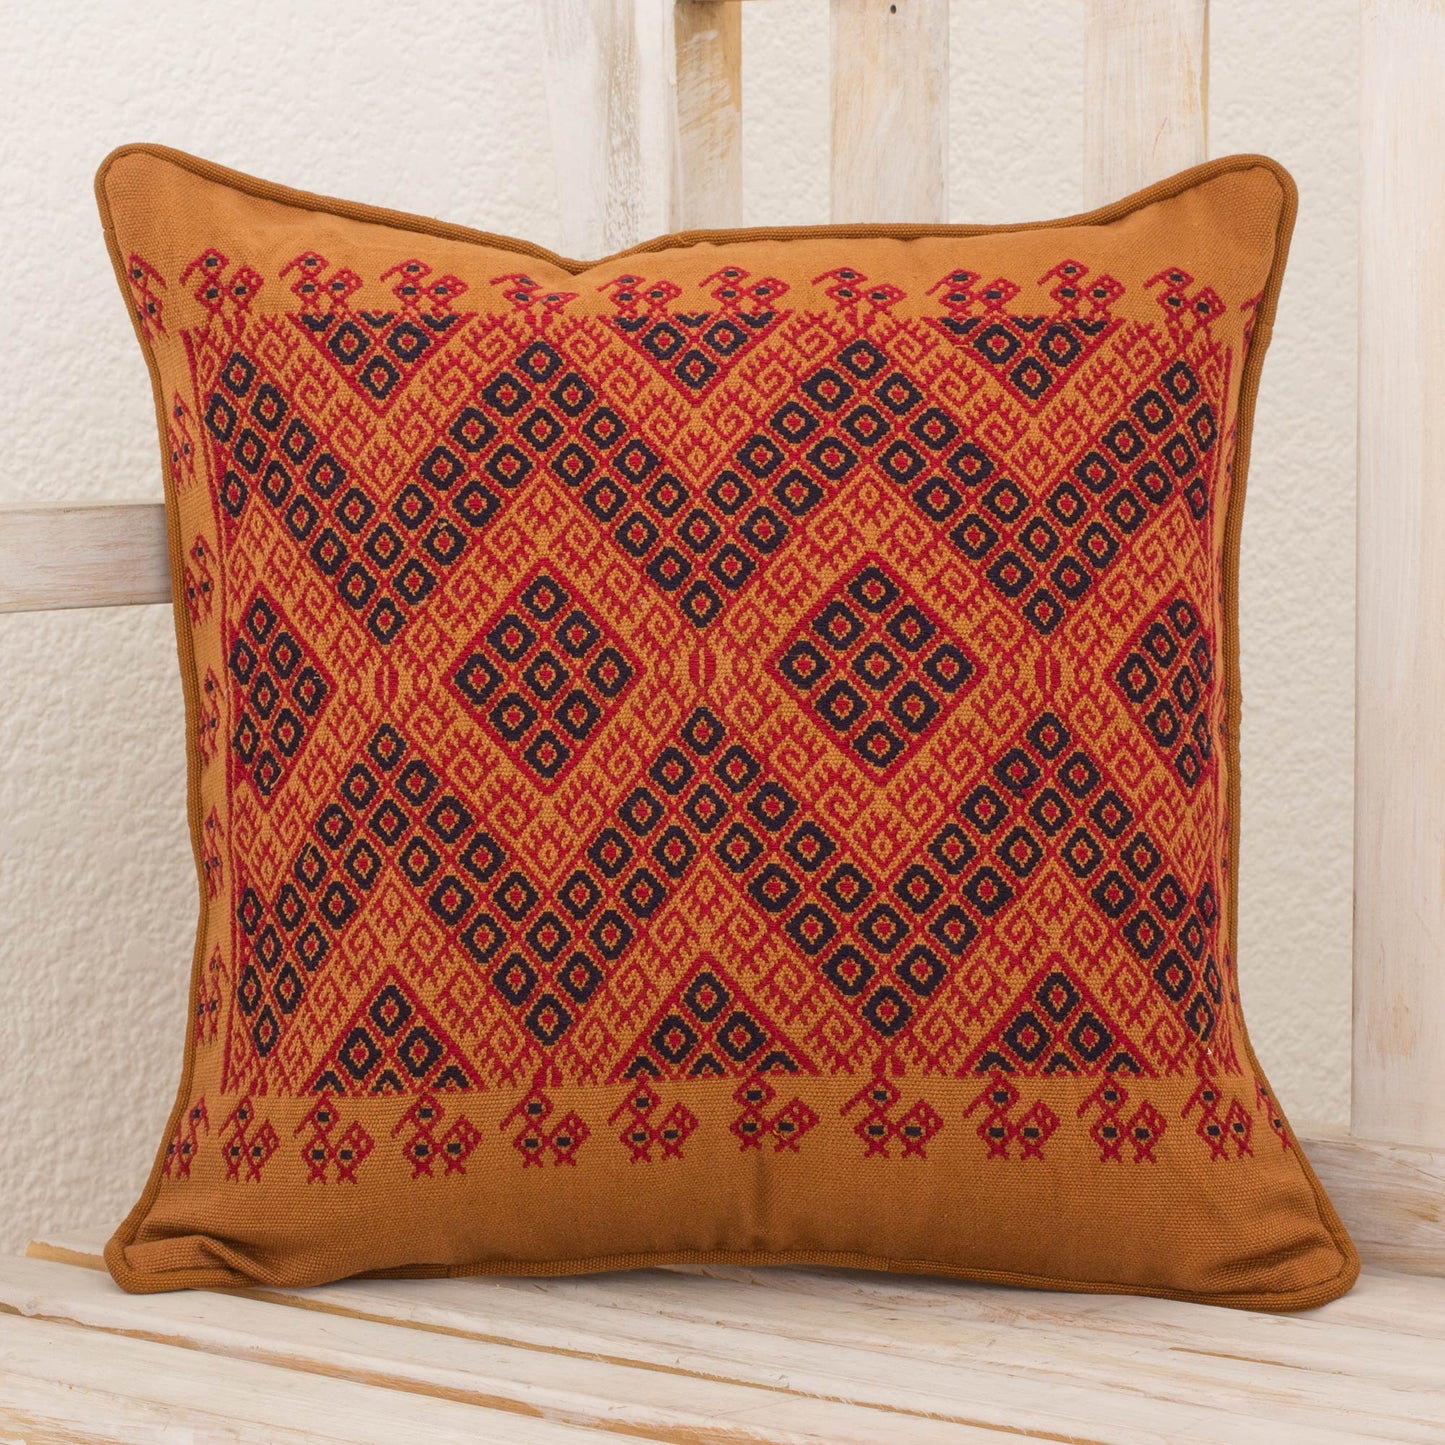 Traditional Symmetry Maya Backstrap Loom Woven Earth Tone Cotton Cushion Cover